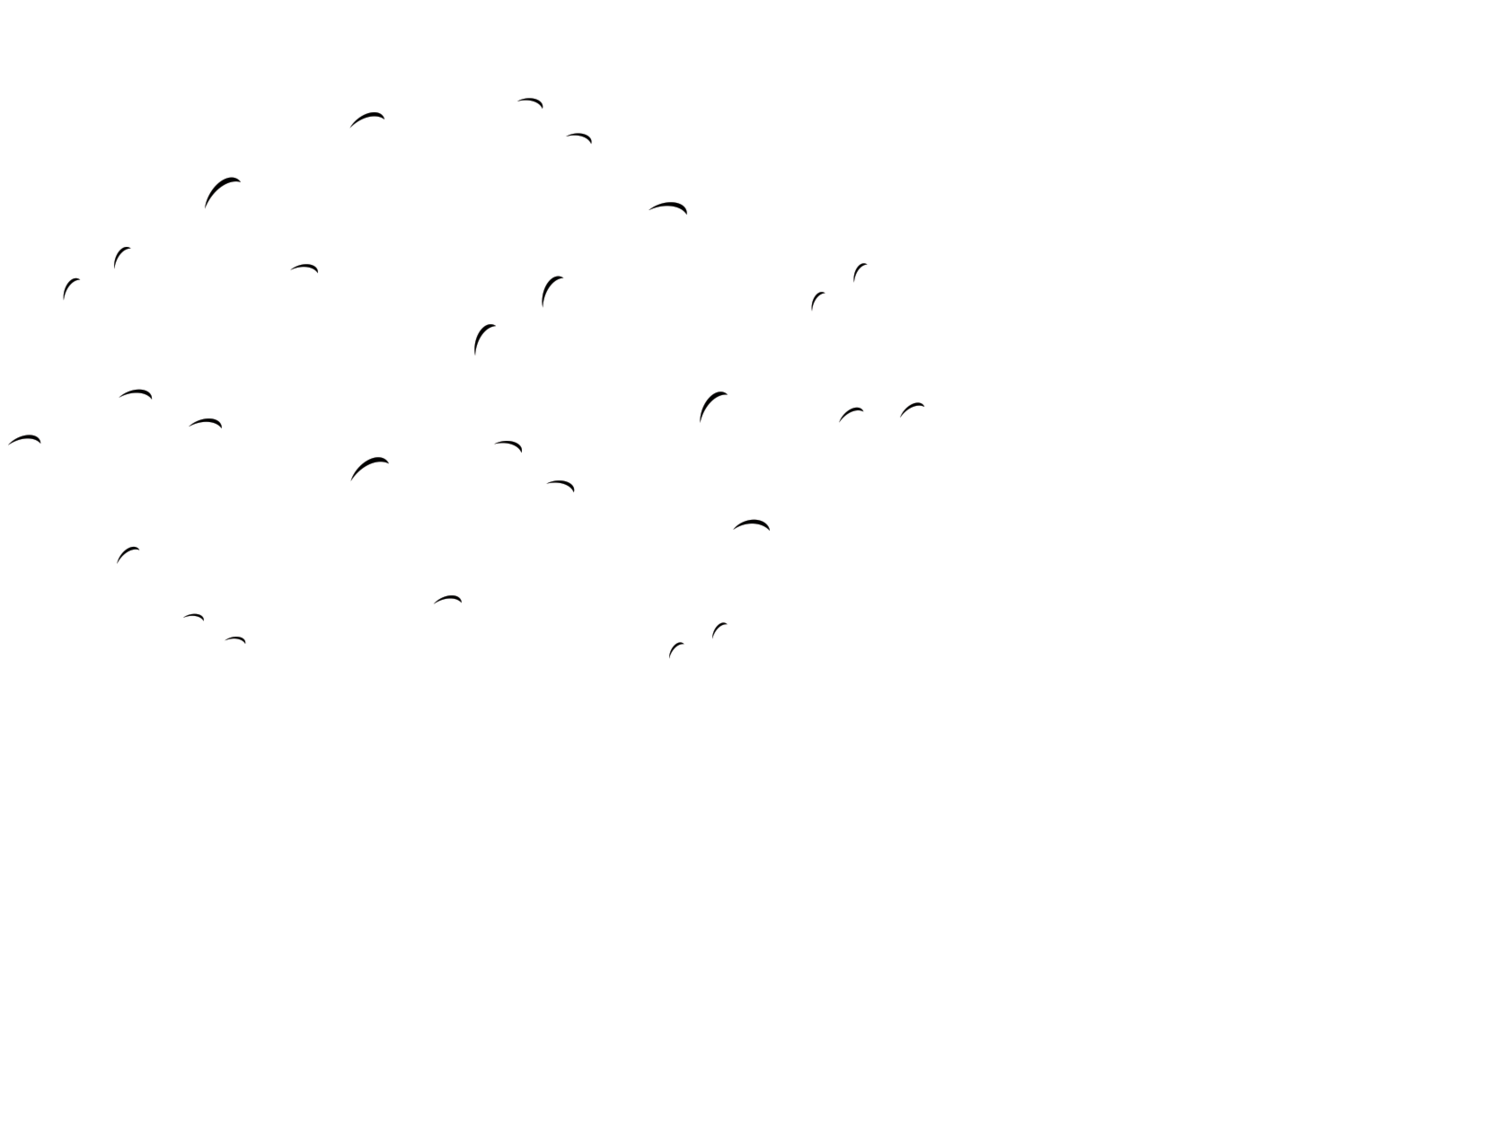 Vezzoso School of Music